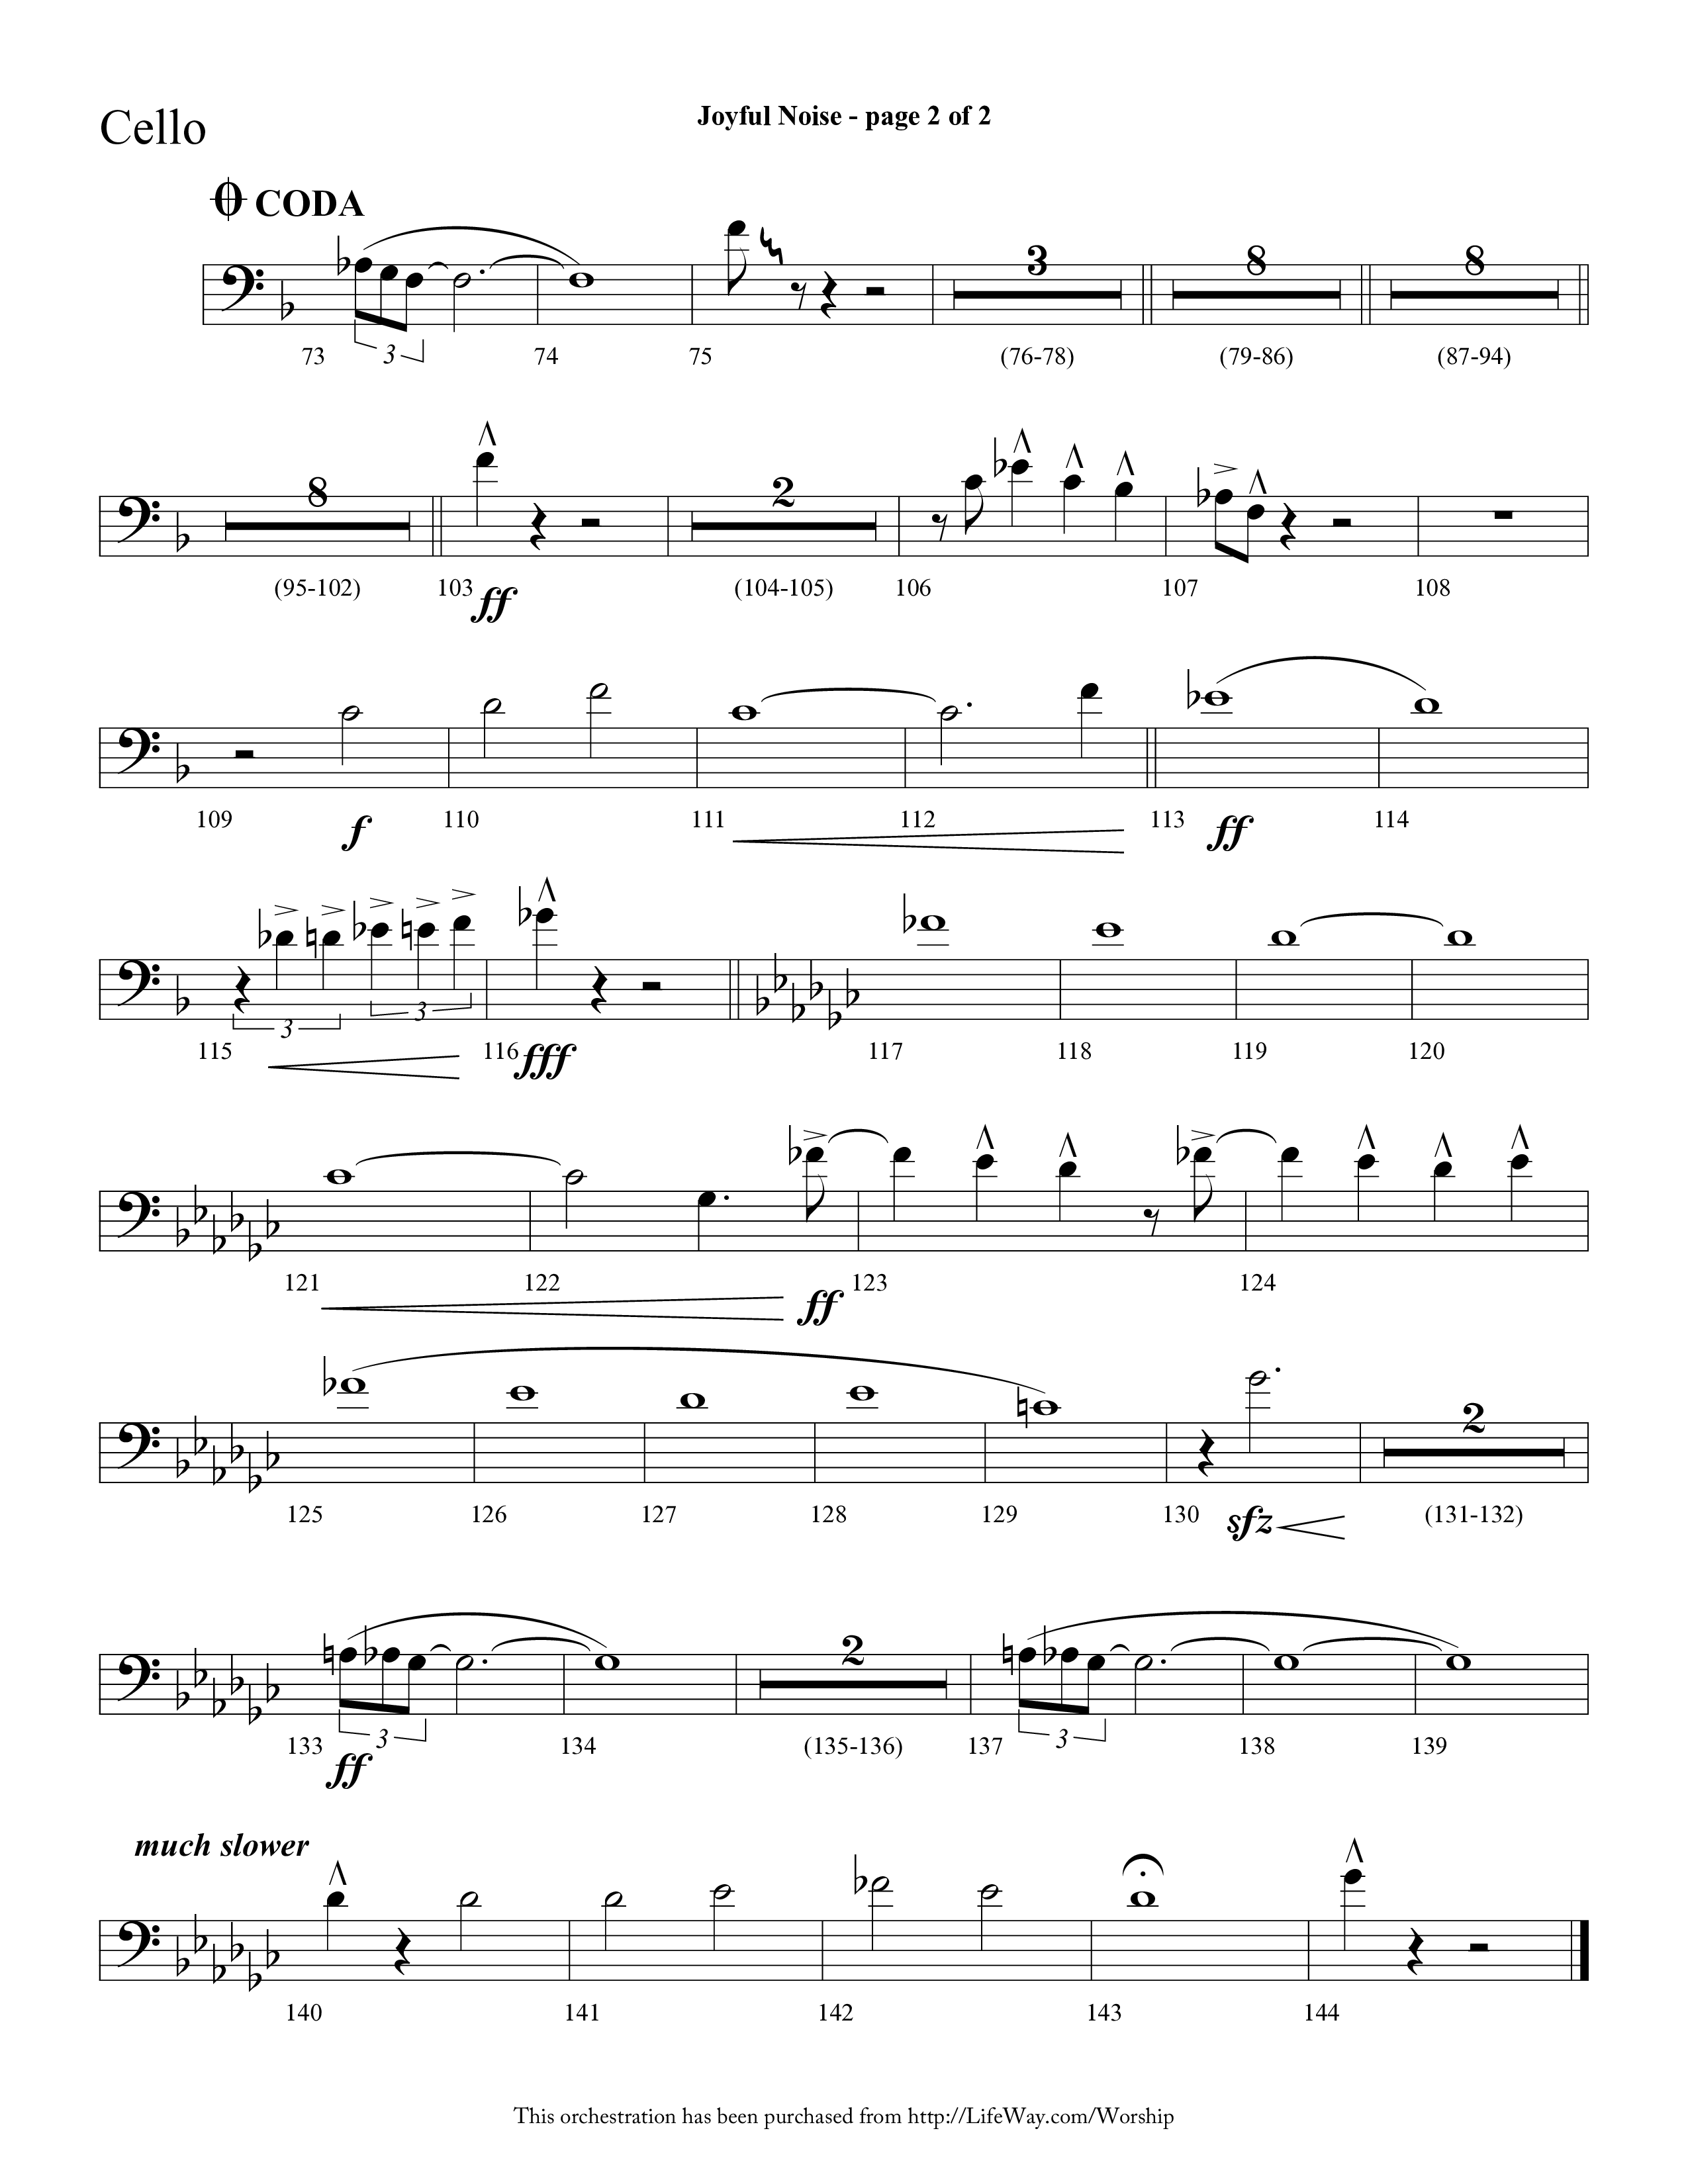 Joyful Noise (Choral Anthem SATB) Cello (Lifeway Choral / Arr. Cliff Duren)